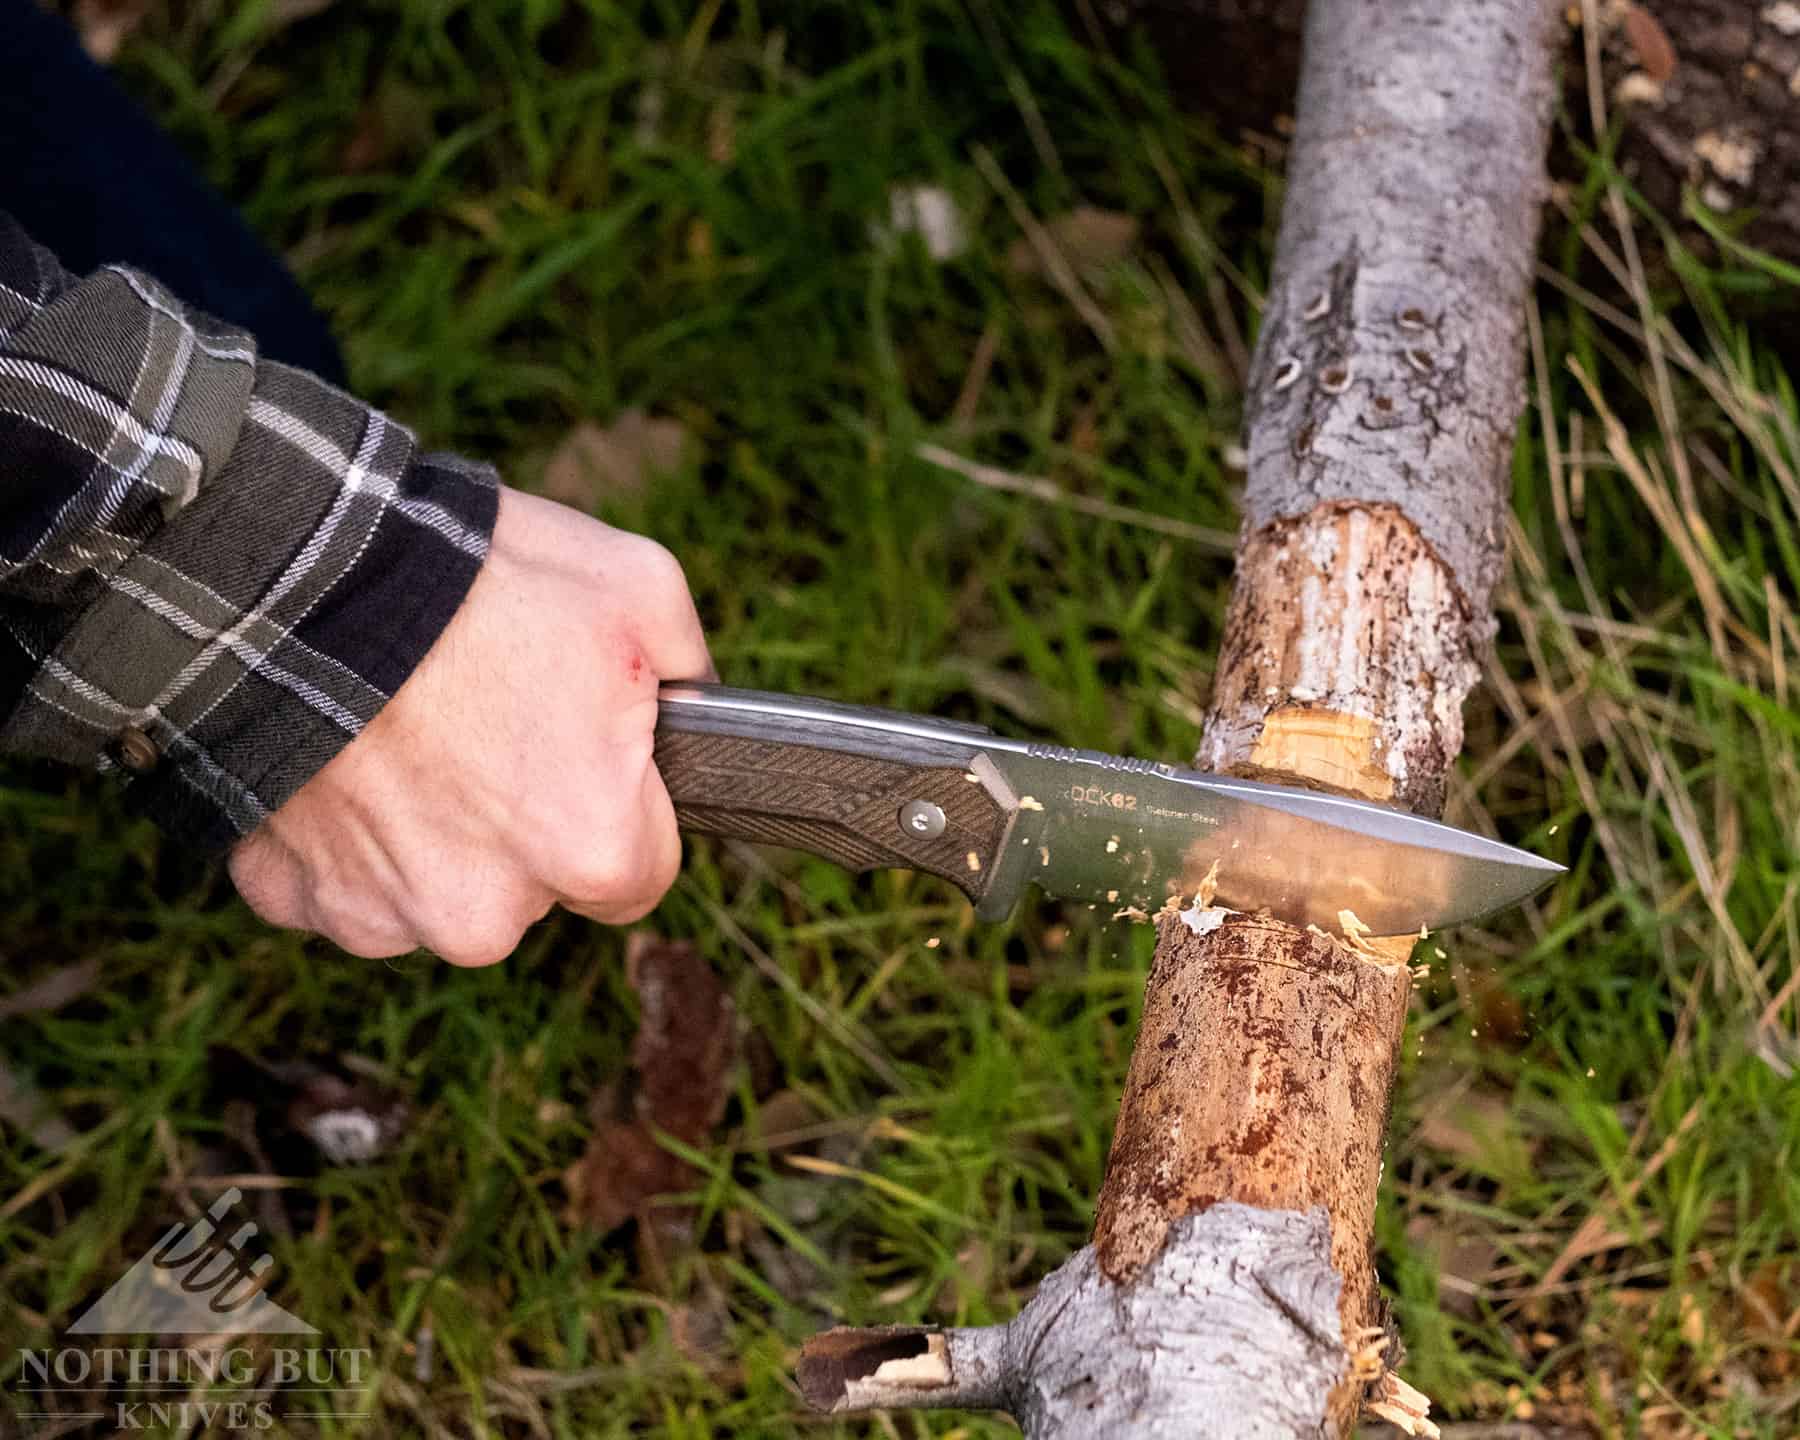 A Woox fixed blade knife shown chopping through a tree branch. 